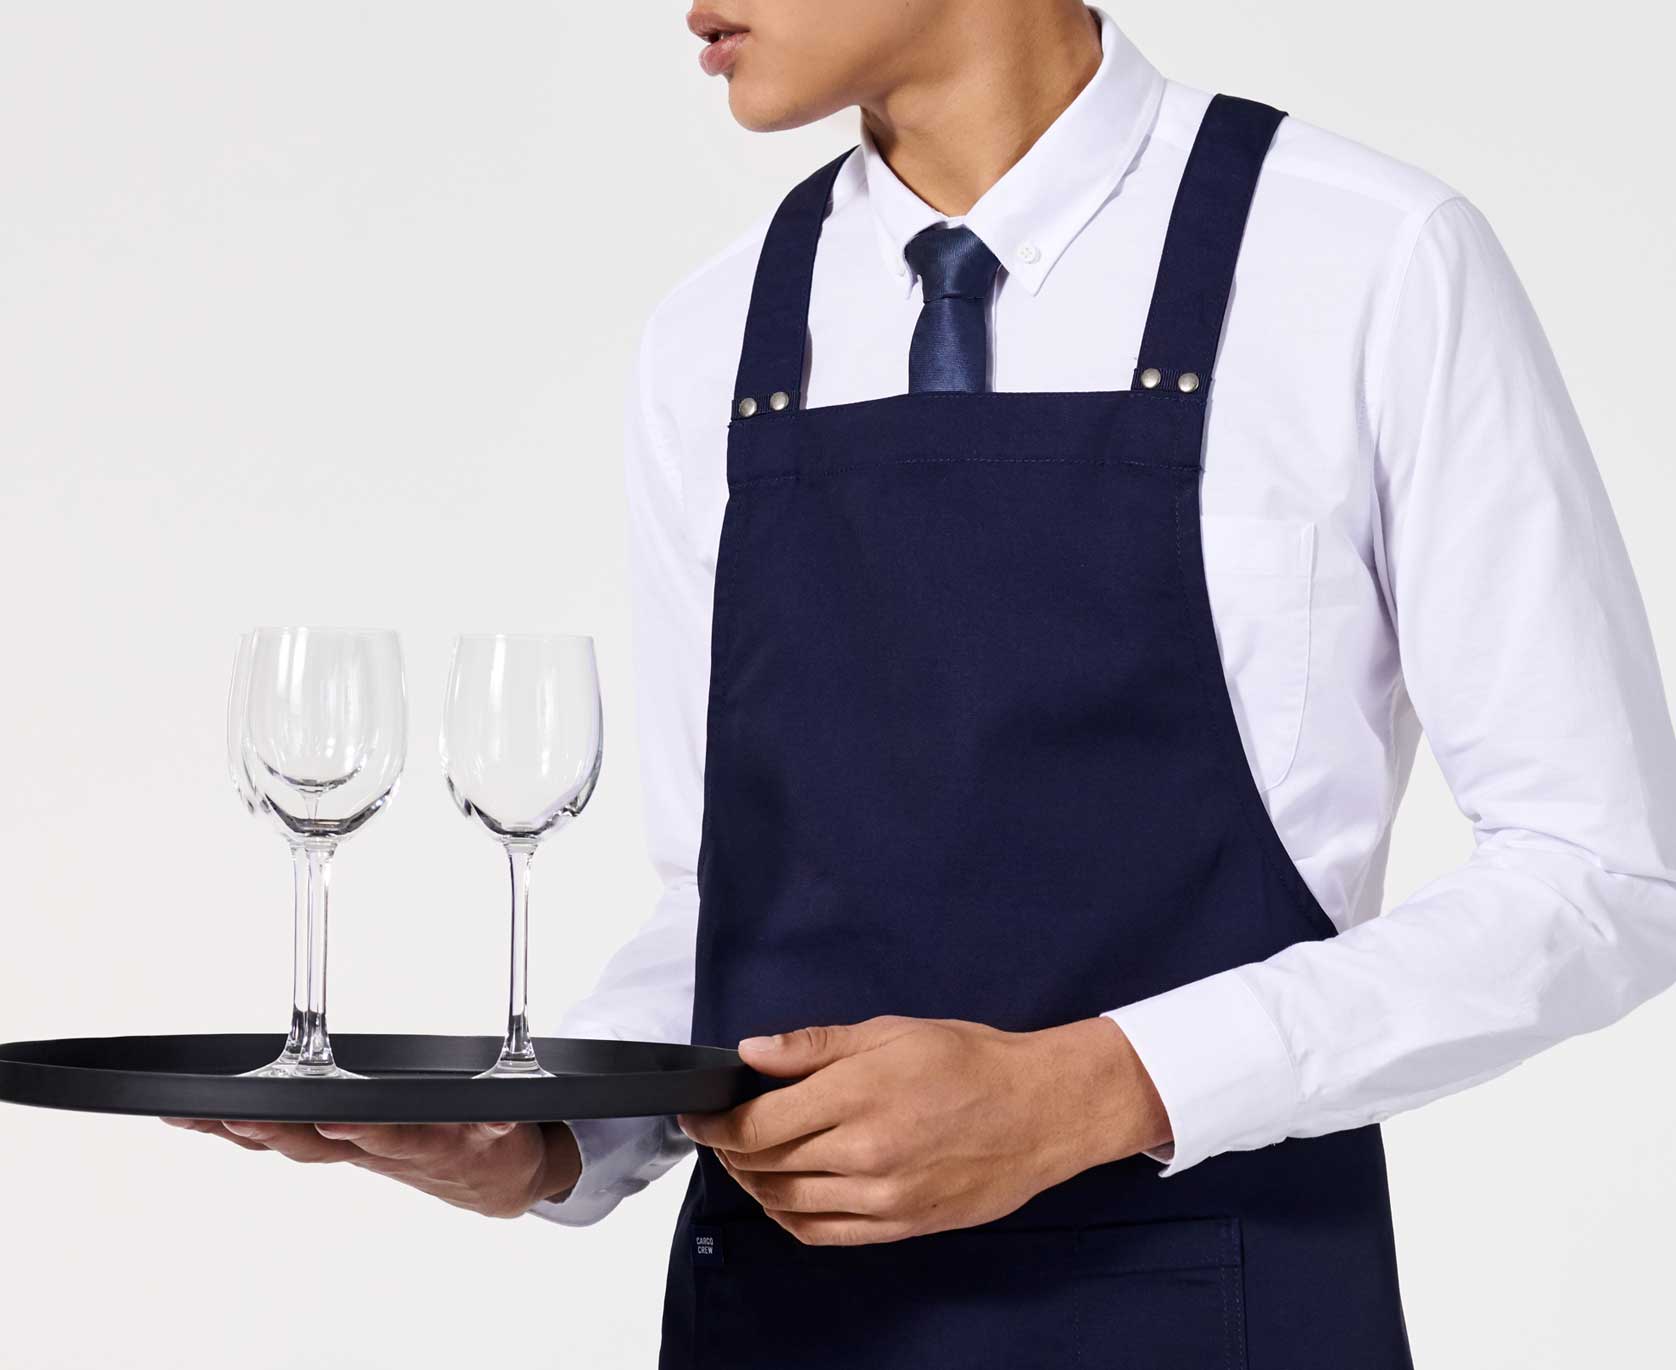 Fine Dining Uniform Ideas - Get The Latest Uniform Designs For Fine Dining